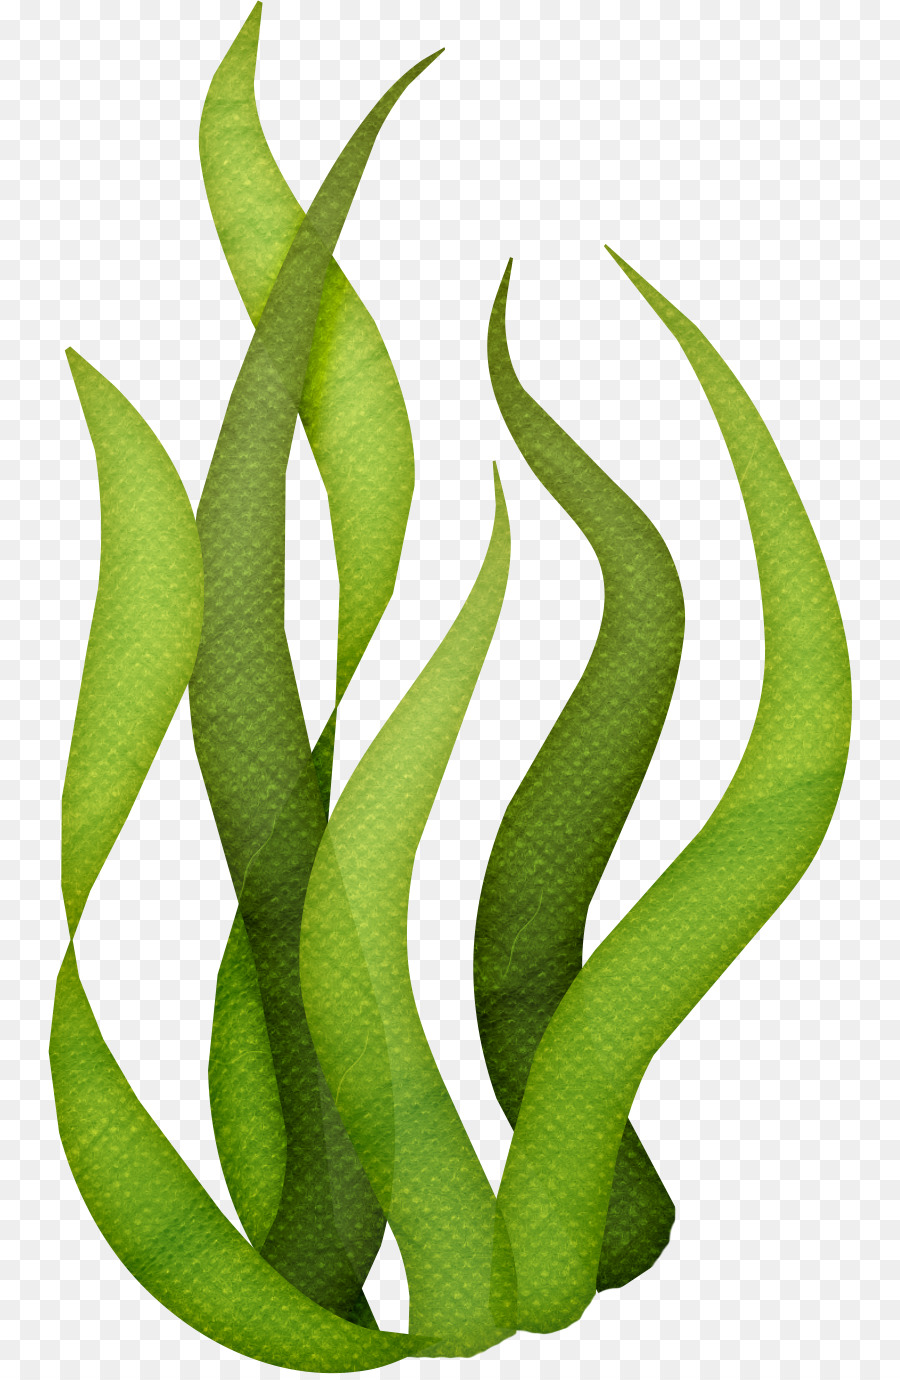 Seaweed Algae Clip art - ocean png download - 804*1374 - Free Transparent Seaweed png Download.